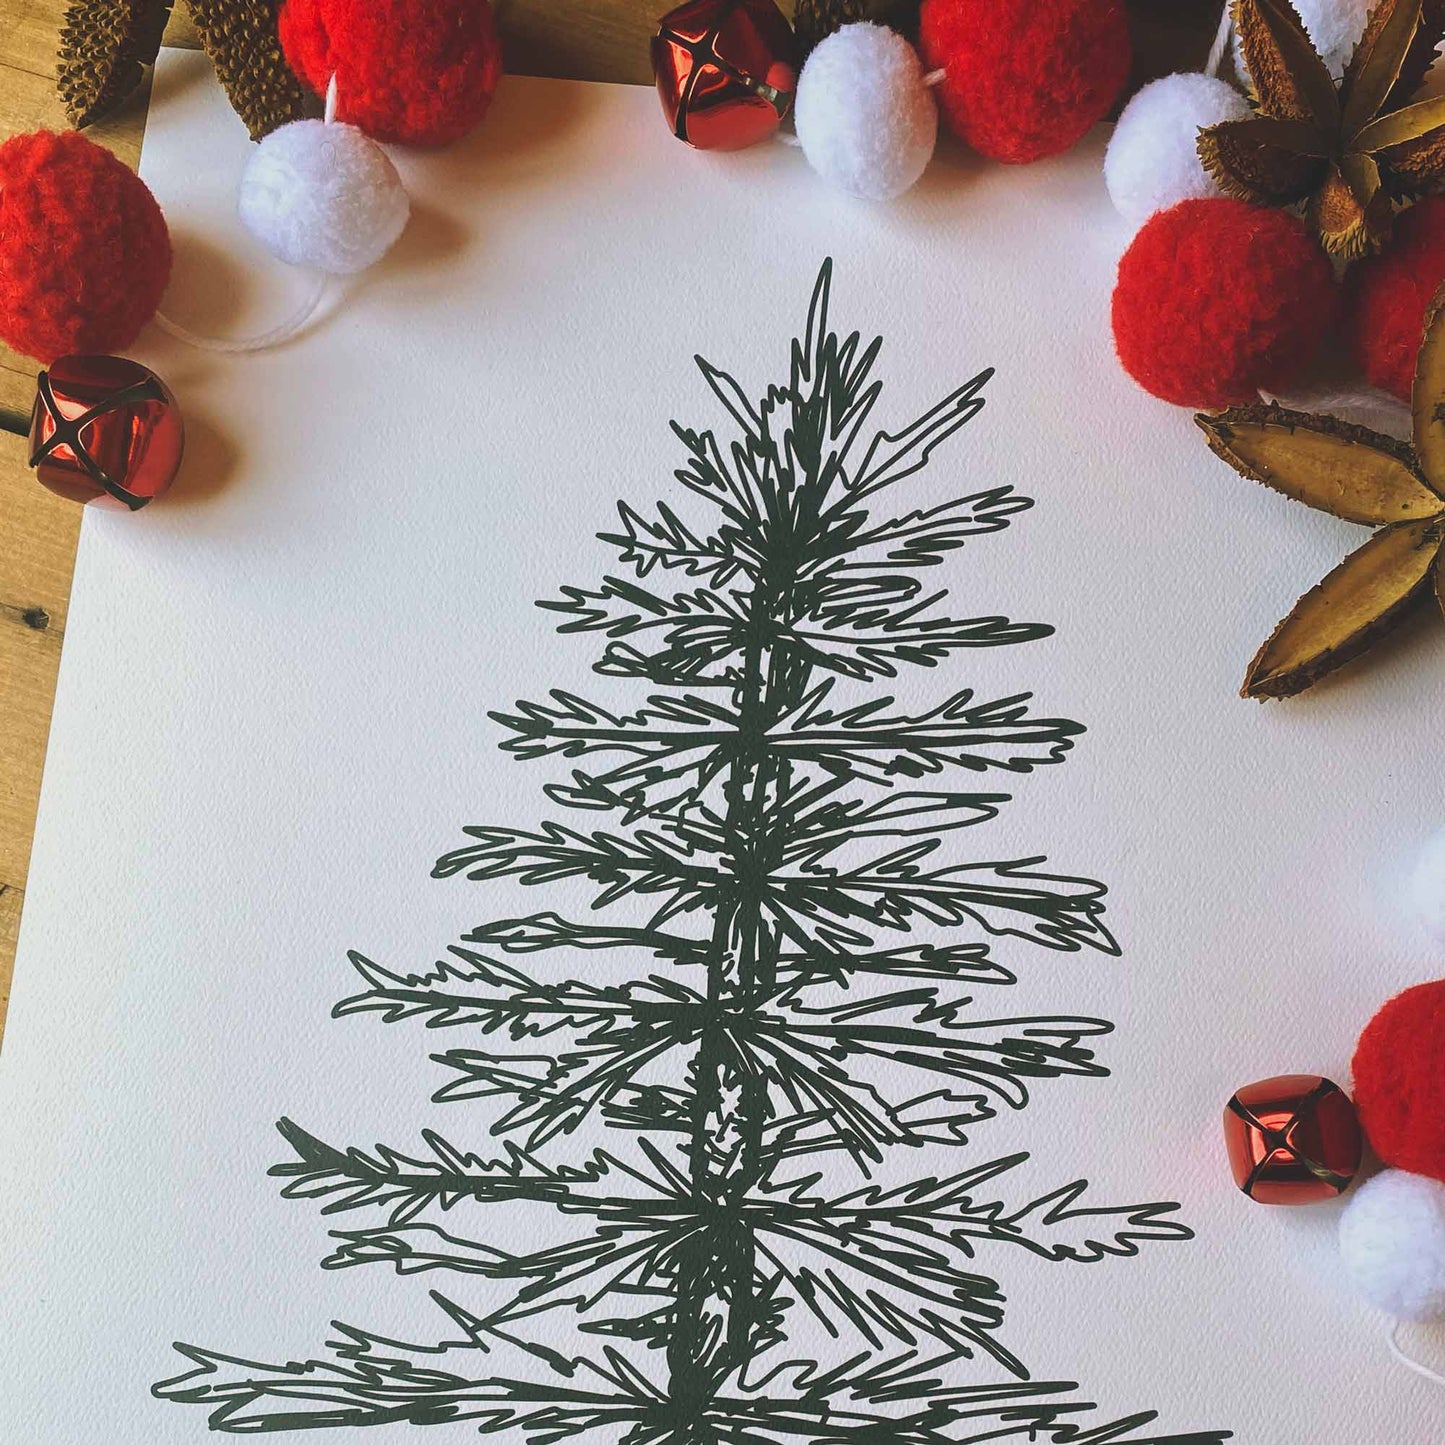 Scruffy Christmas Tree - Christmas Wall Decoration - Illustrated Christmas Tree By Sheridan Eveline